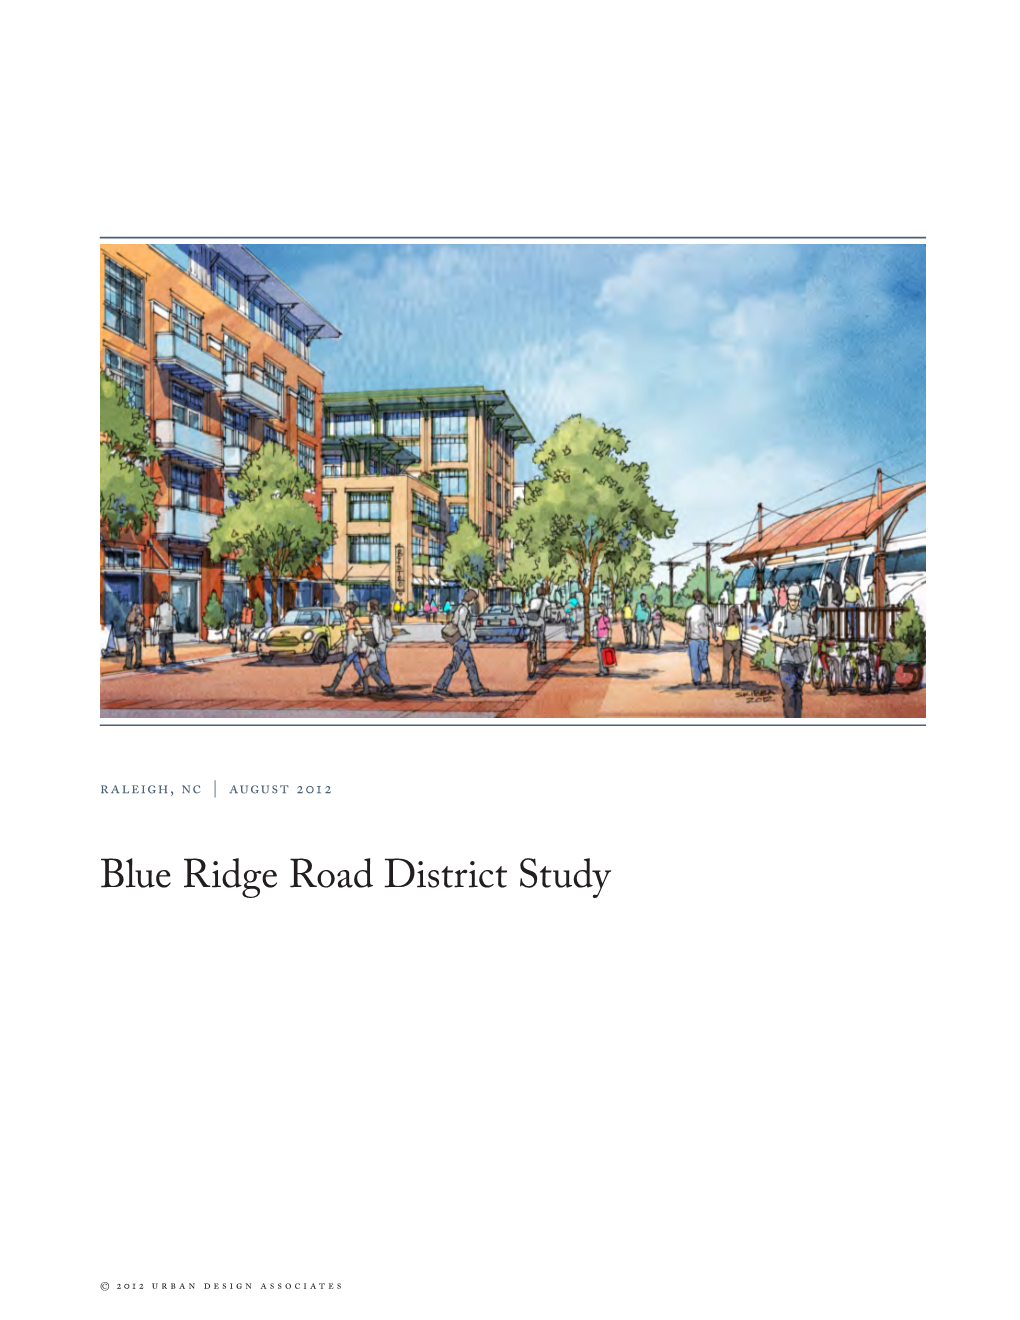 Blue Ridge Road District Study Final Report